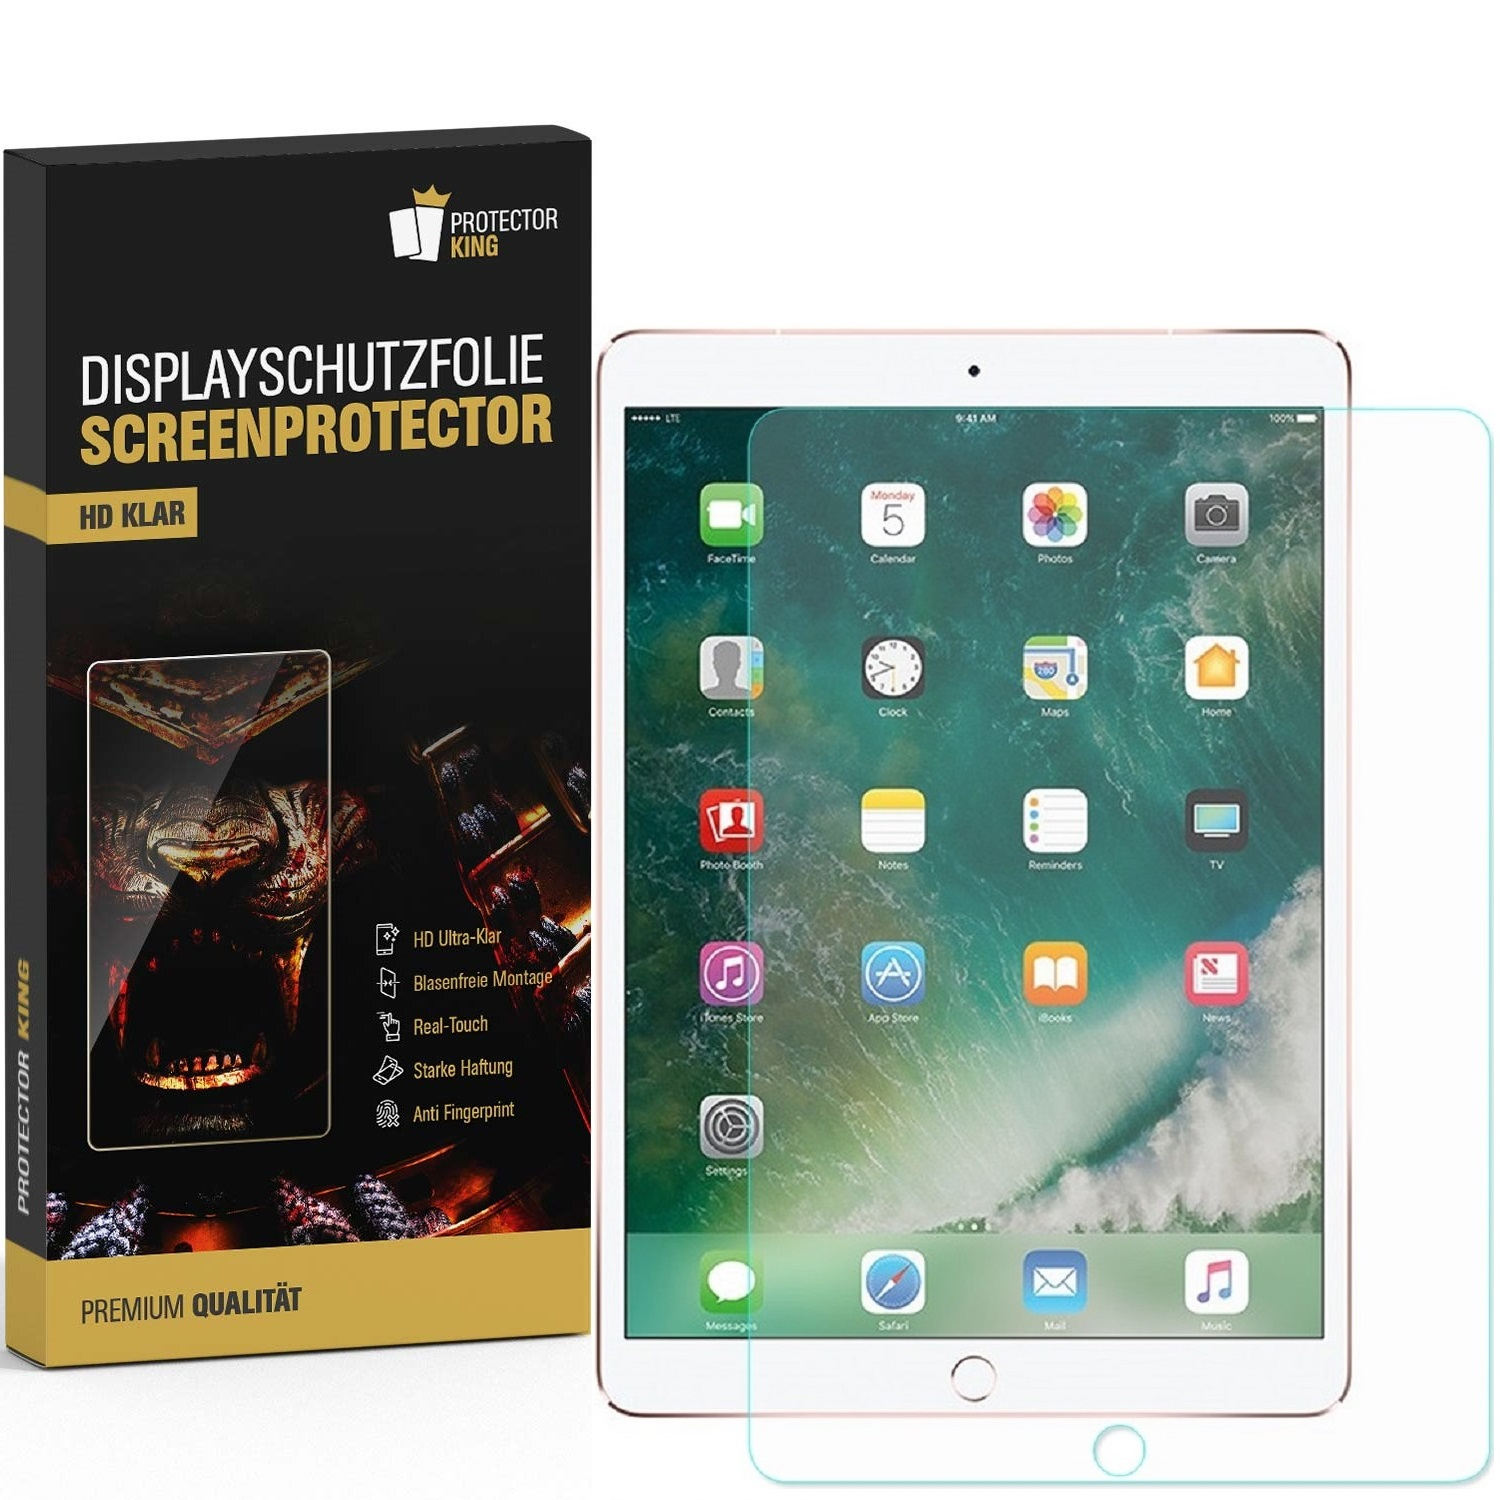 Displayschutzfolie(für Displayschutzfolie KLAR iPad HD Apple Schutzfolie PROTECTORKING Pro 9.7) 6x